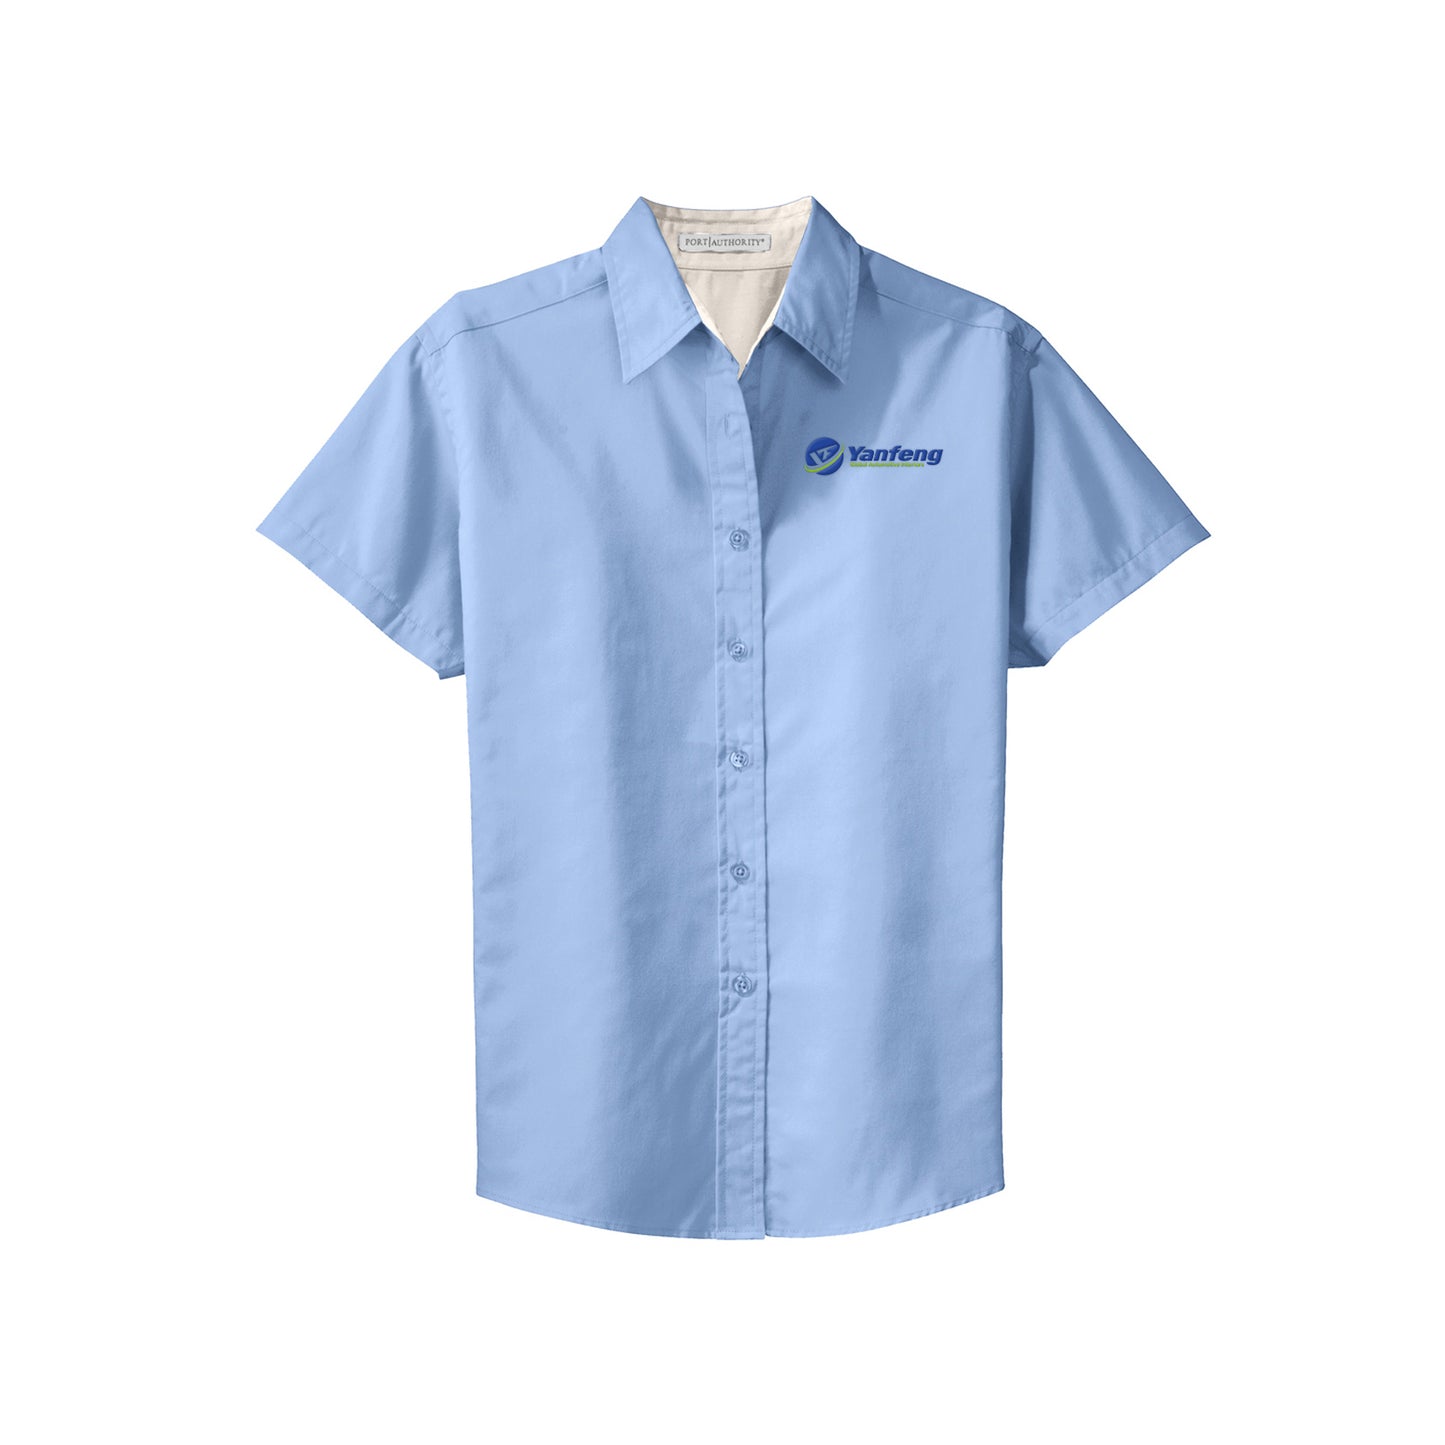 Yanfeng | Ladies Short Sleeve Easy Care Shirt